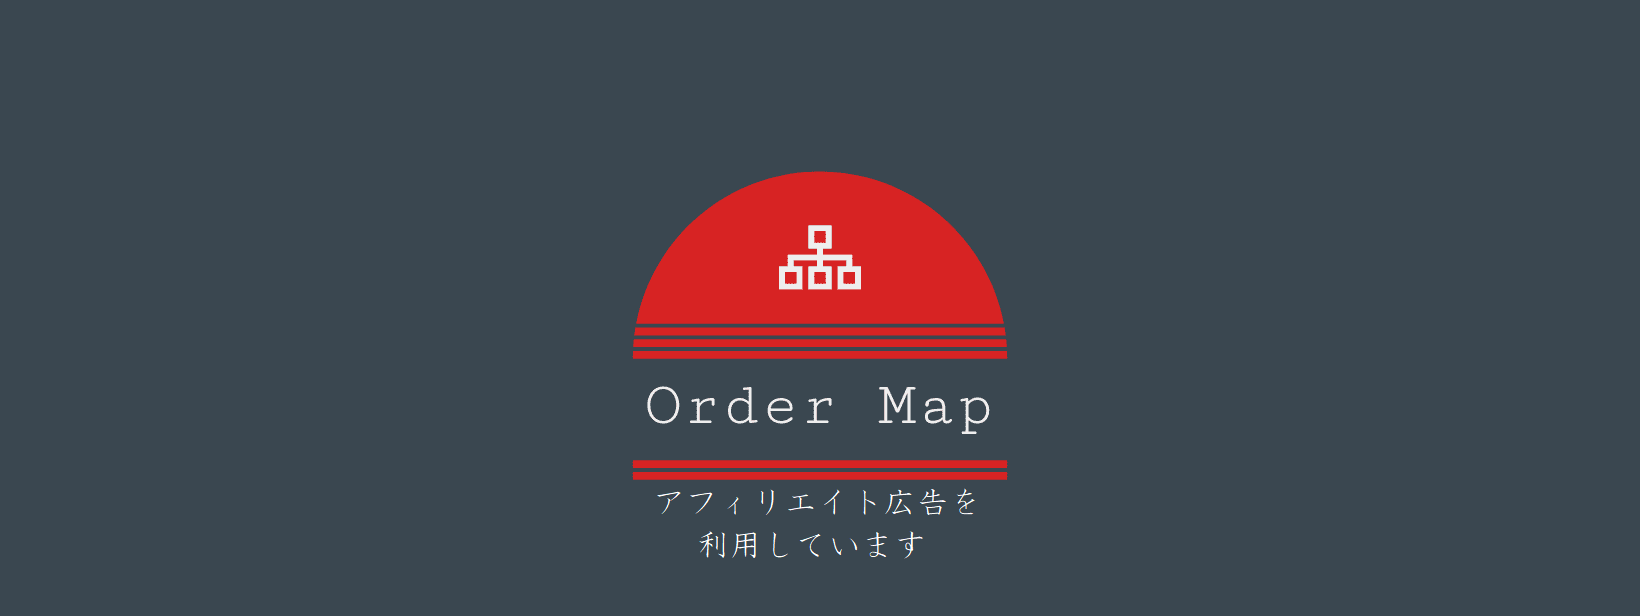 Order Map